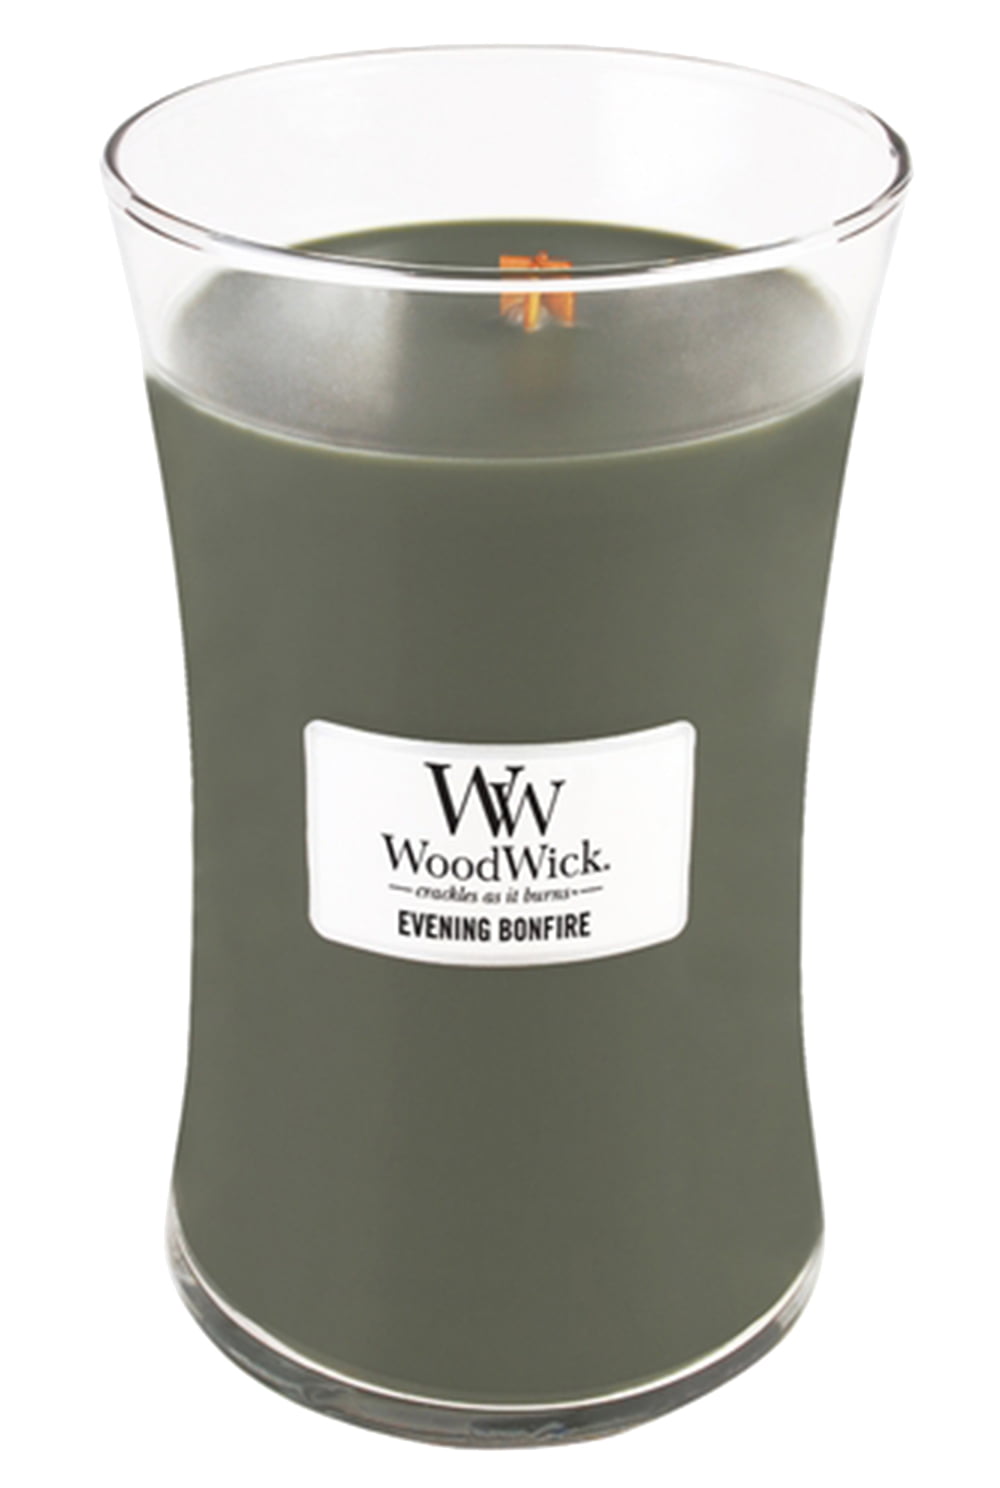 woodwick candles box sale